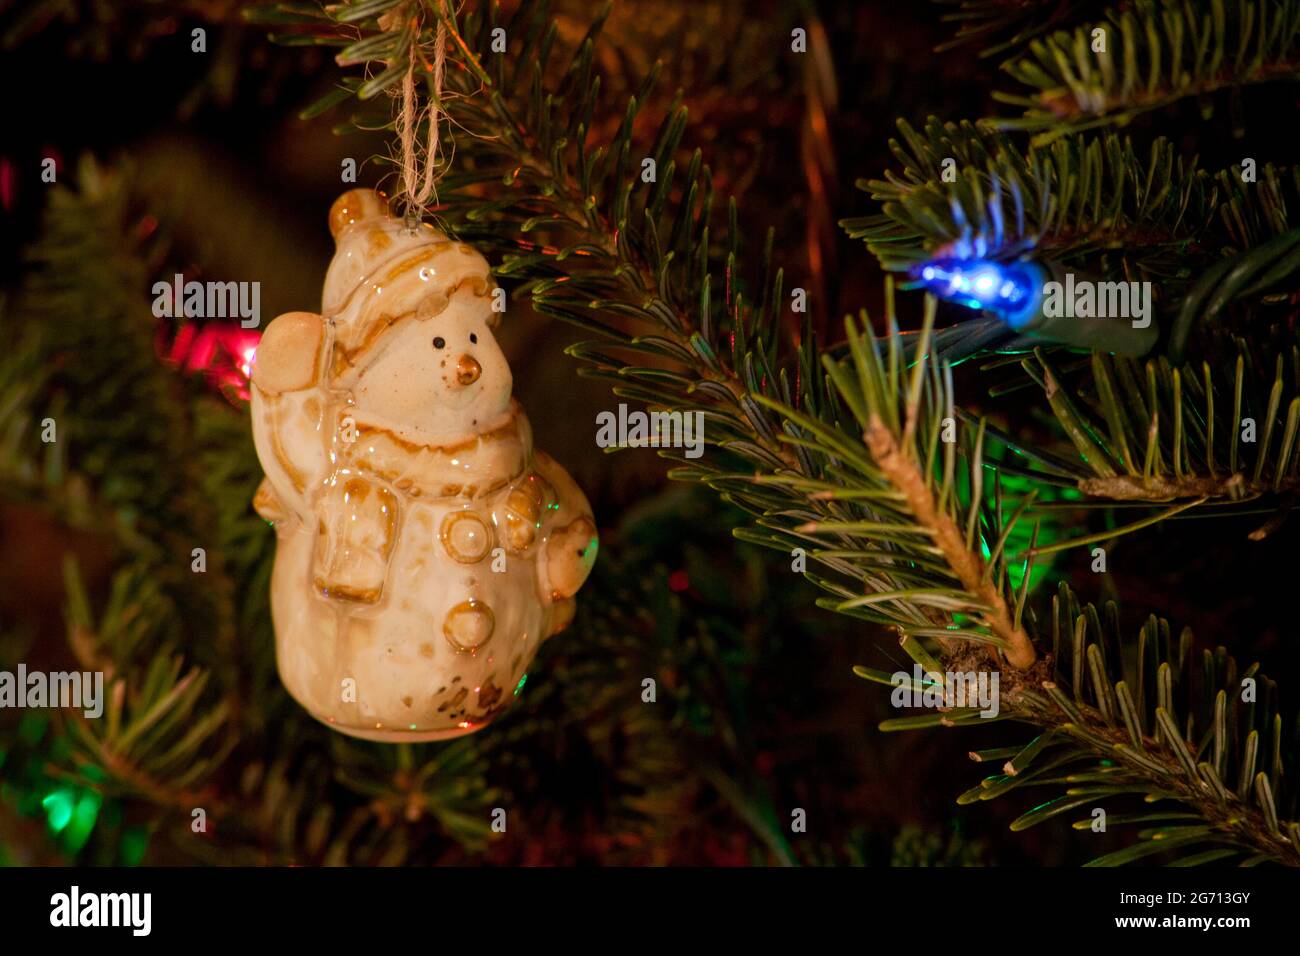 Snowman ornament hanging on Christmas Tree Stock Photo